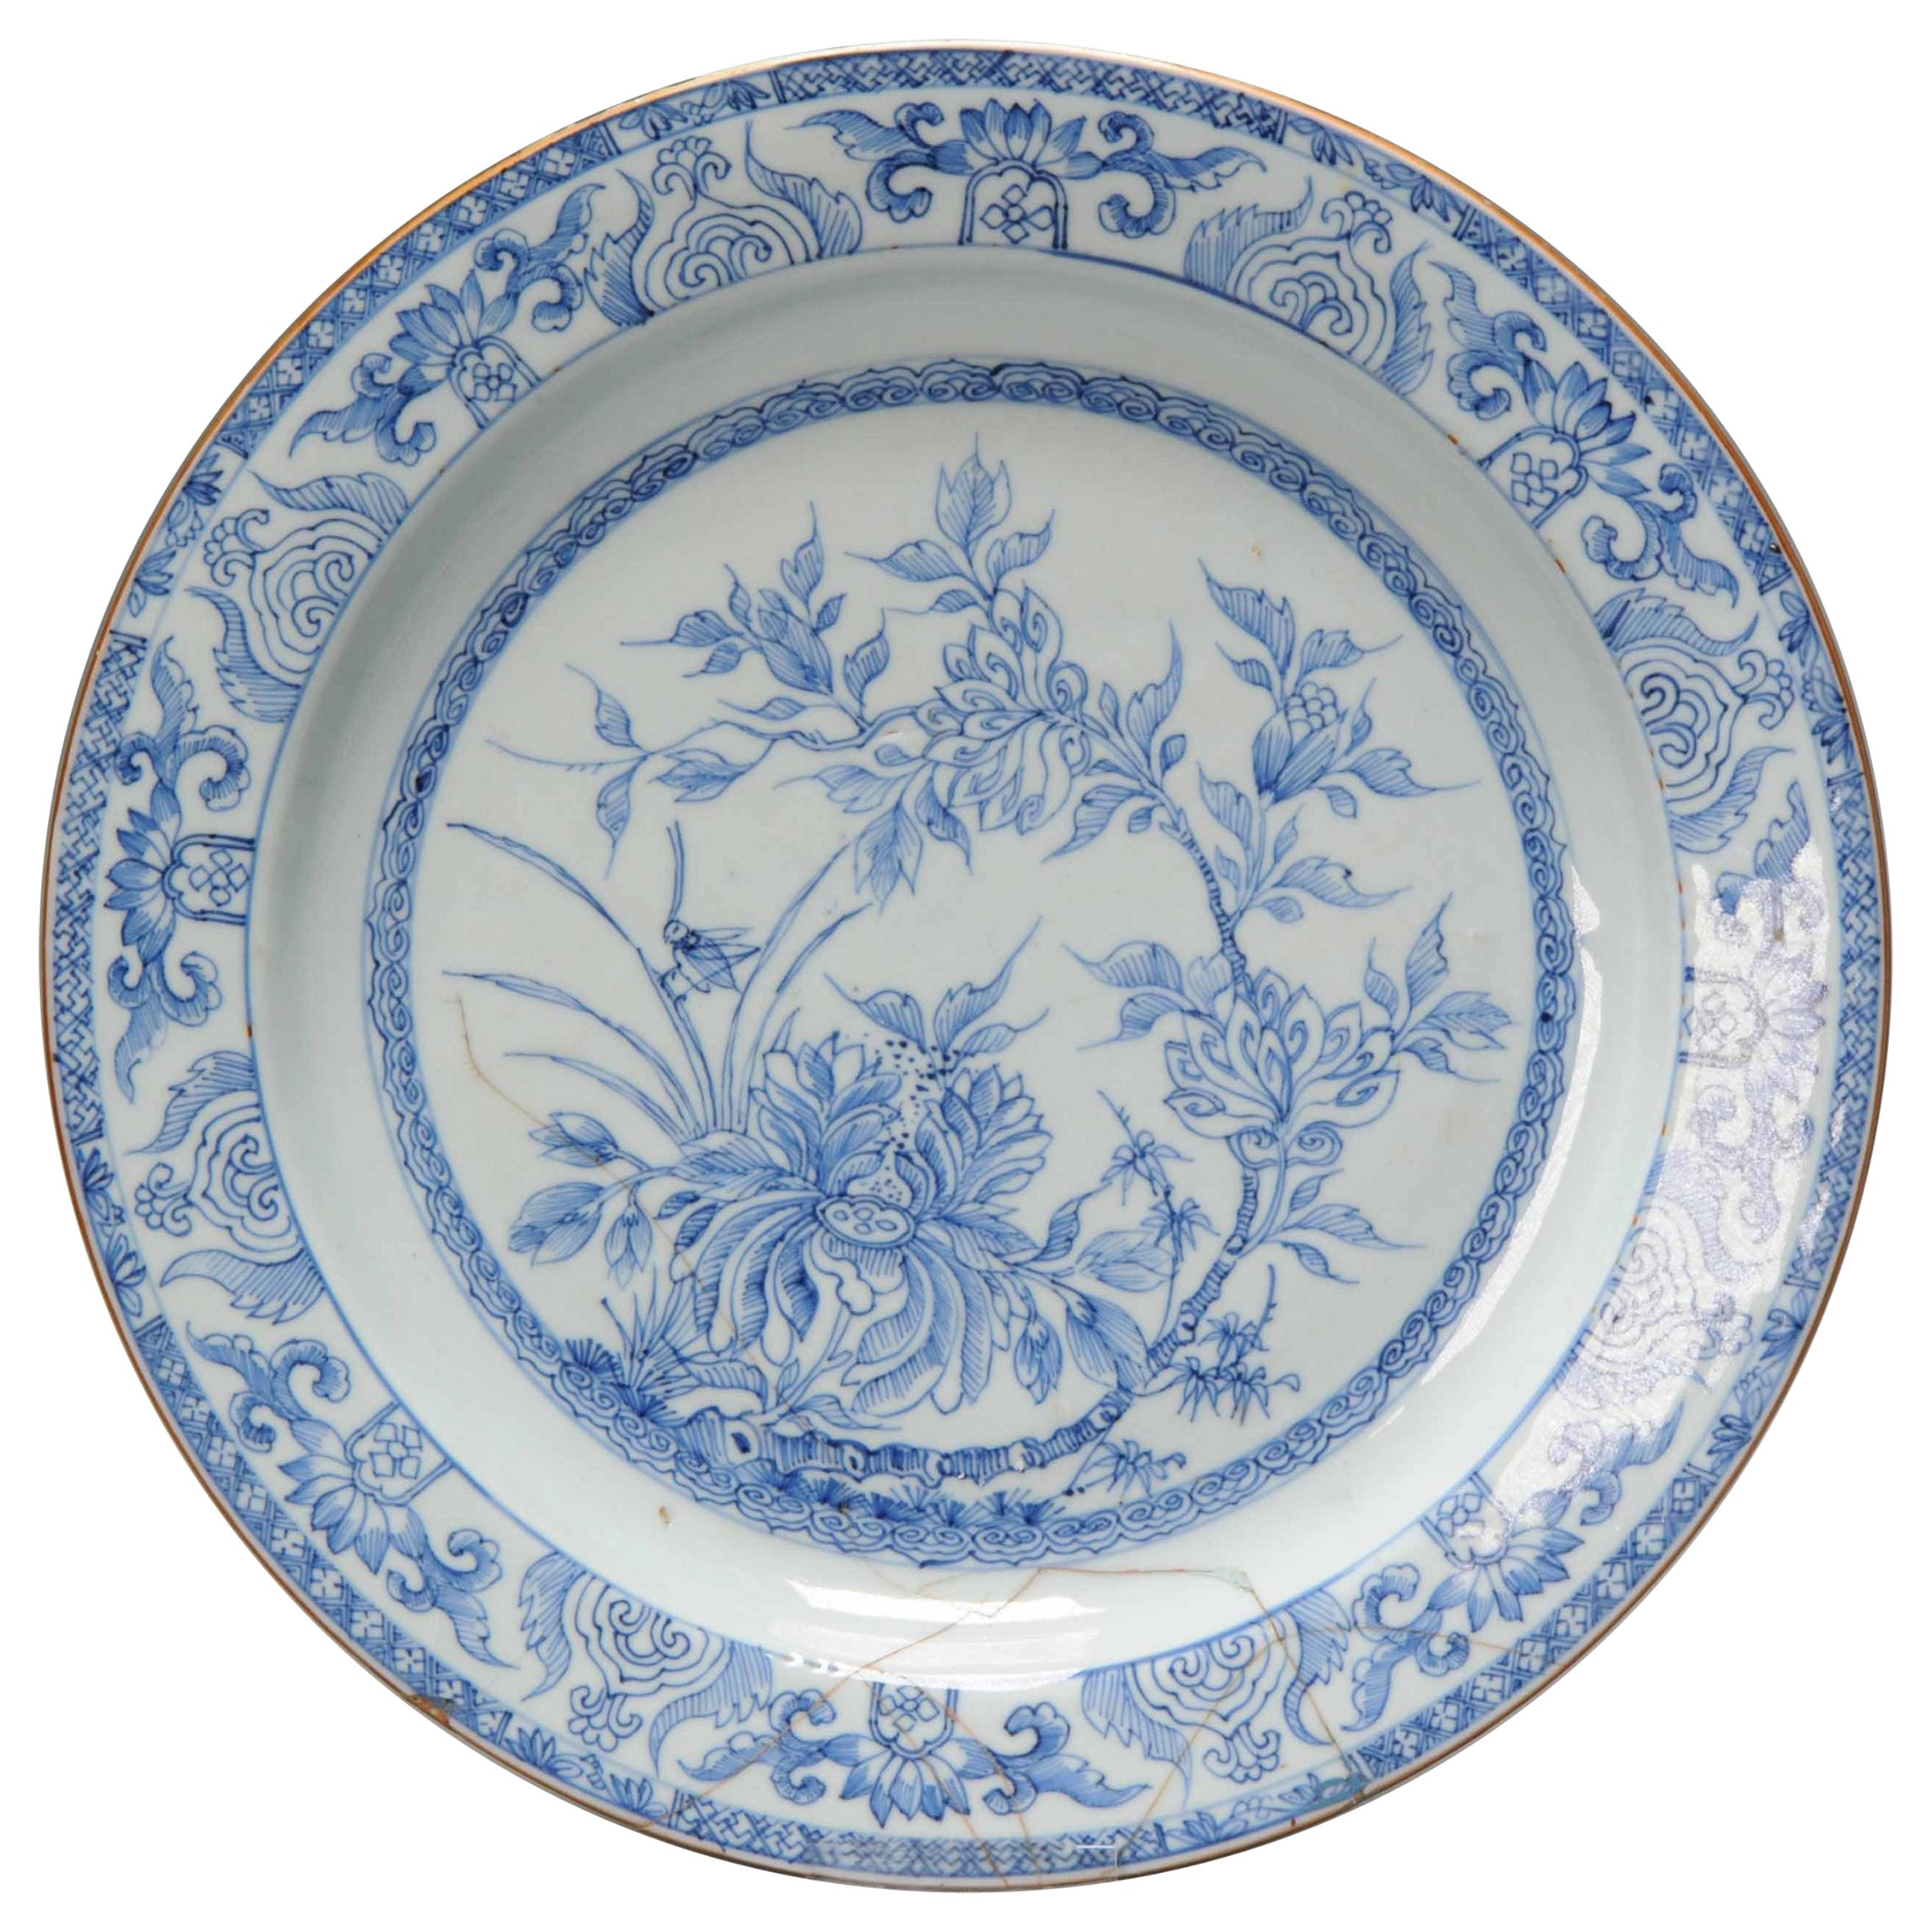 Großer antiker blau-weißer Yongzheng-Porzellanteller/Charger aus chinesischem Porzellan, 18. Jahrhundert